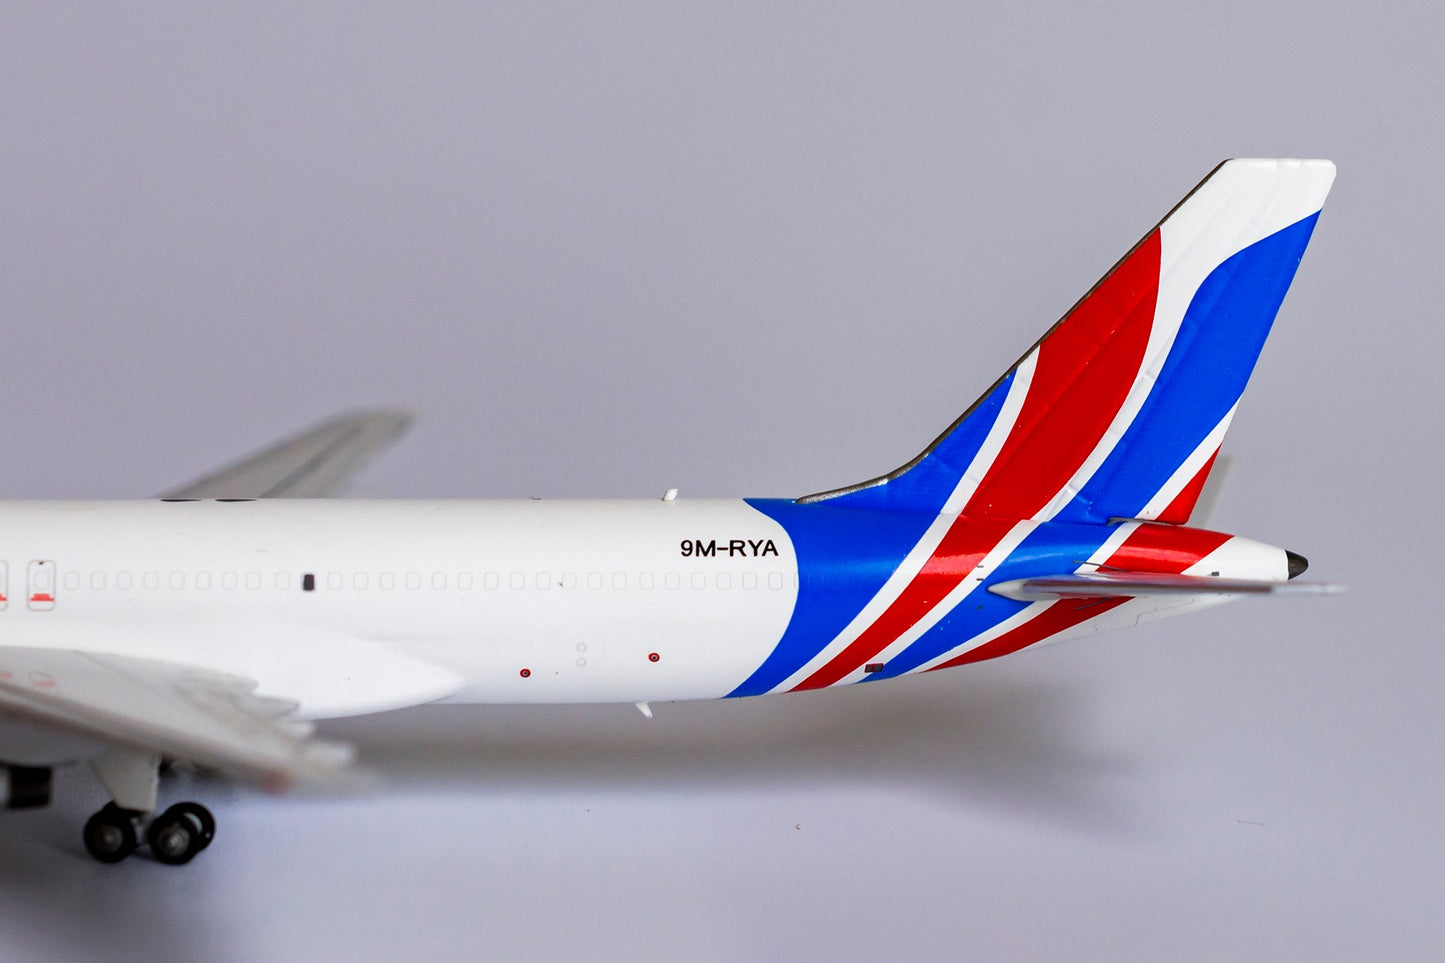 1:400 NG Models Raya Airways Boeing 757-200PCF "Old Colors" 9M-RYA 53165